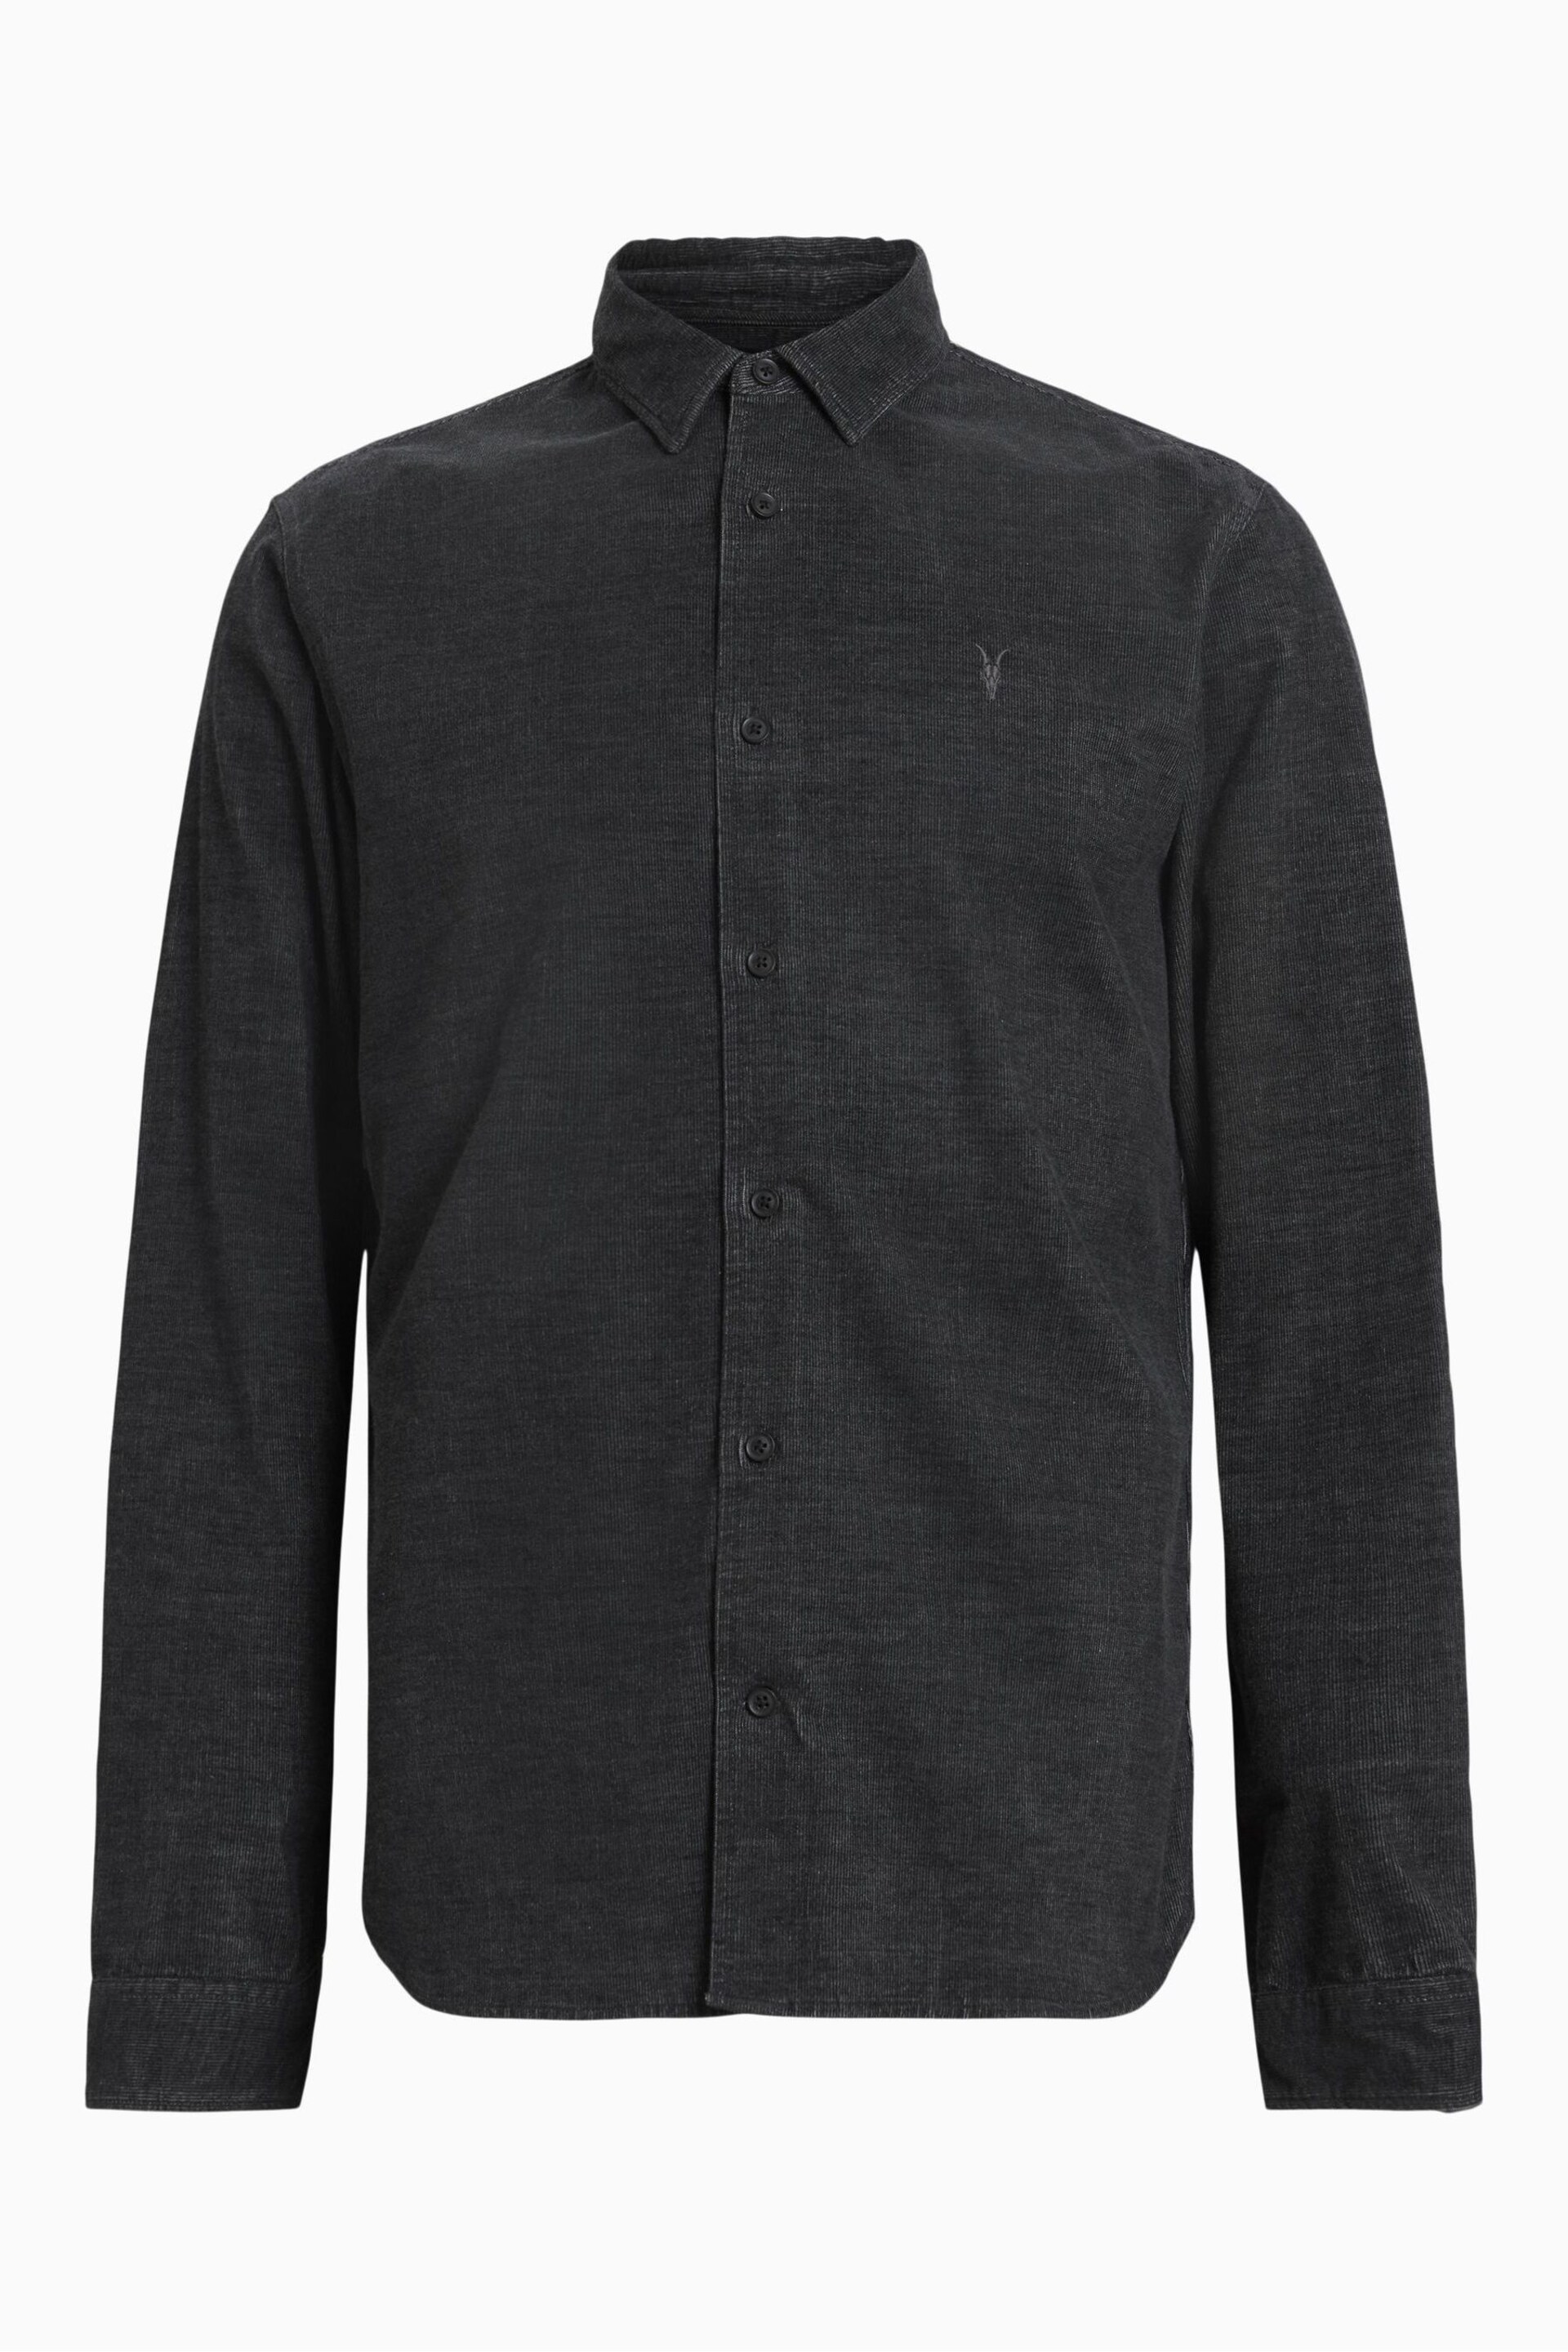 AllSaints Black Long Sleeve Lorella Shirt - Image 5 of 5